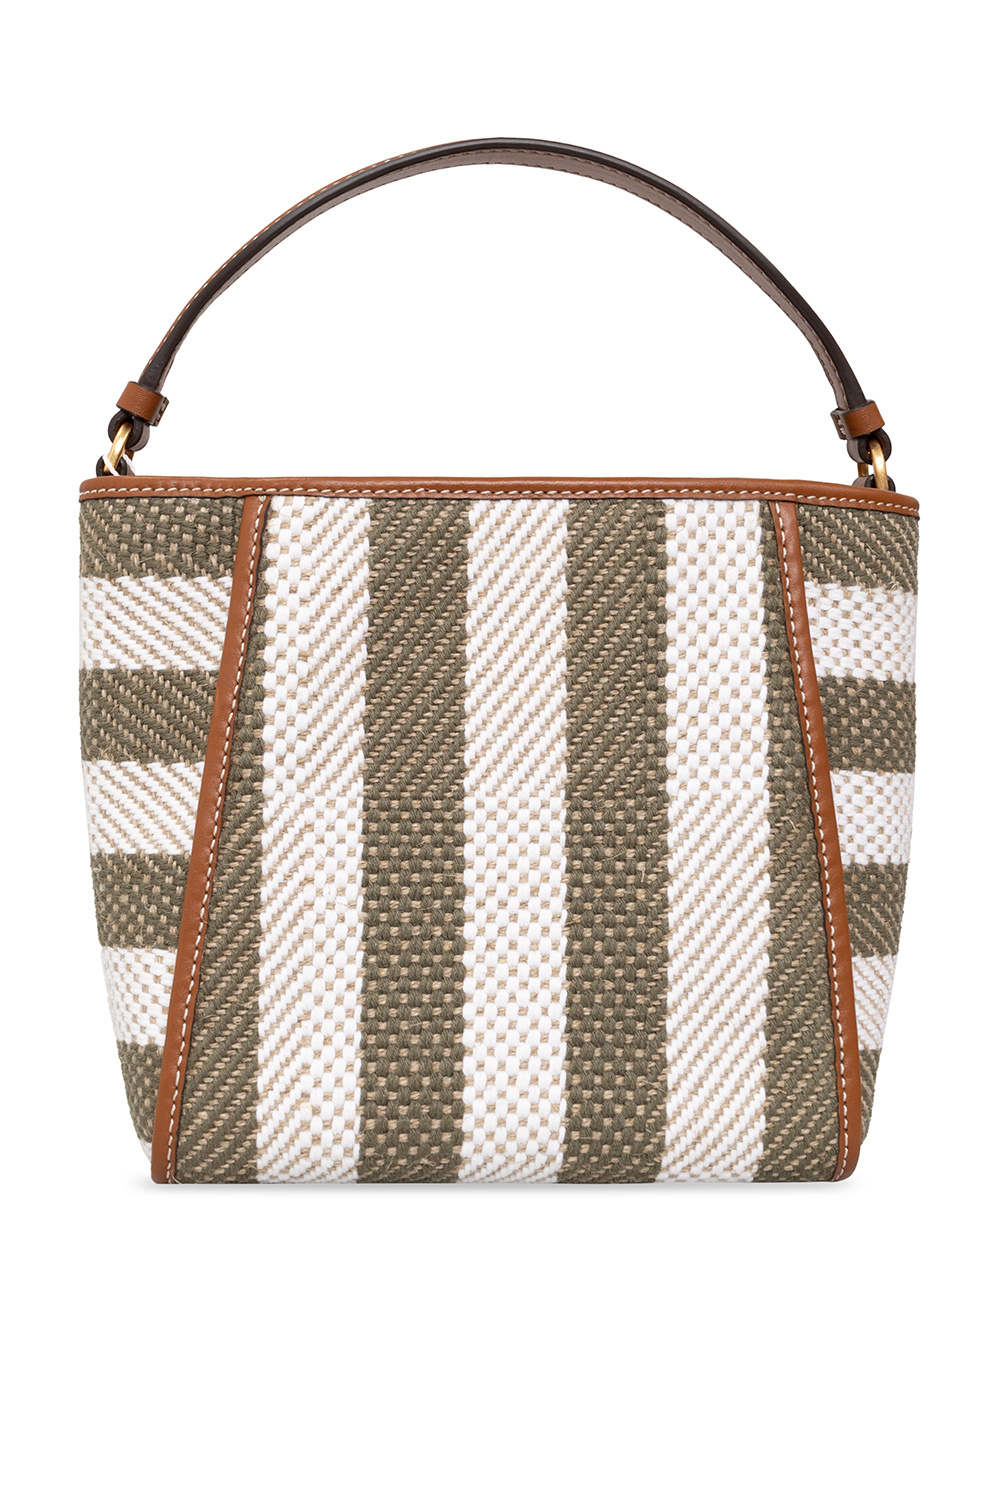 Tory Burch Small McGraw Woven Stripe Bucket Bag